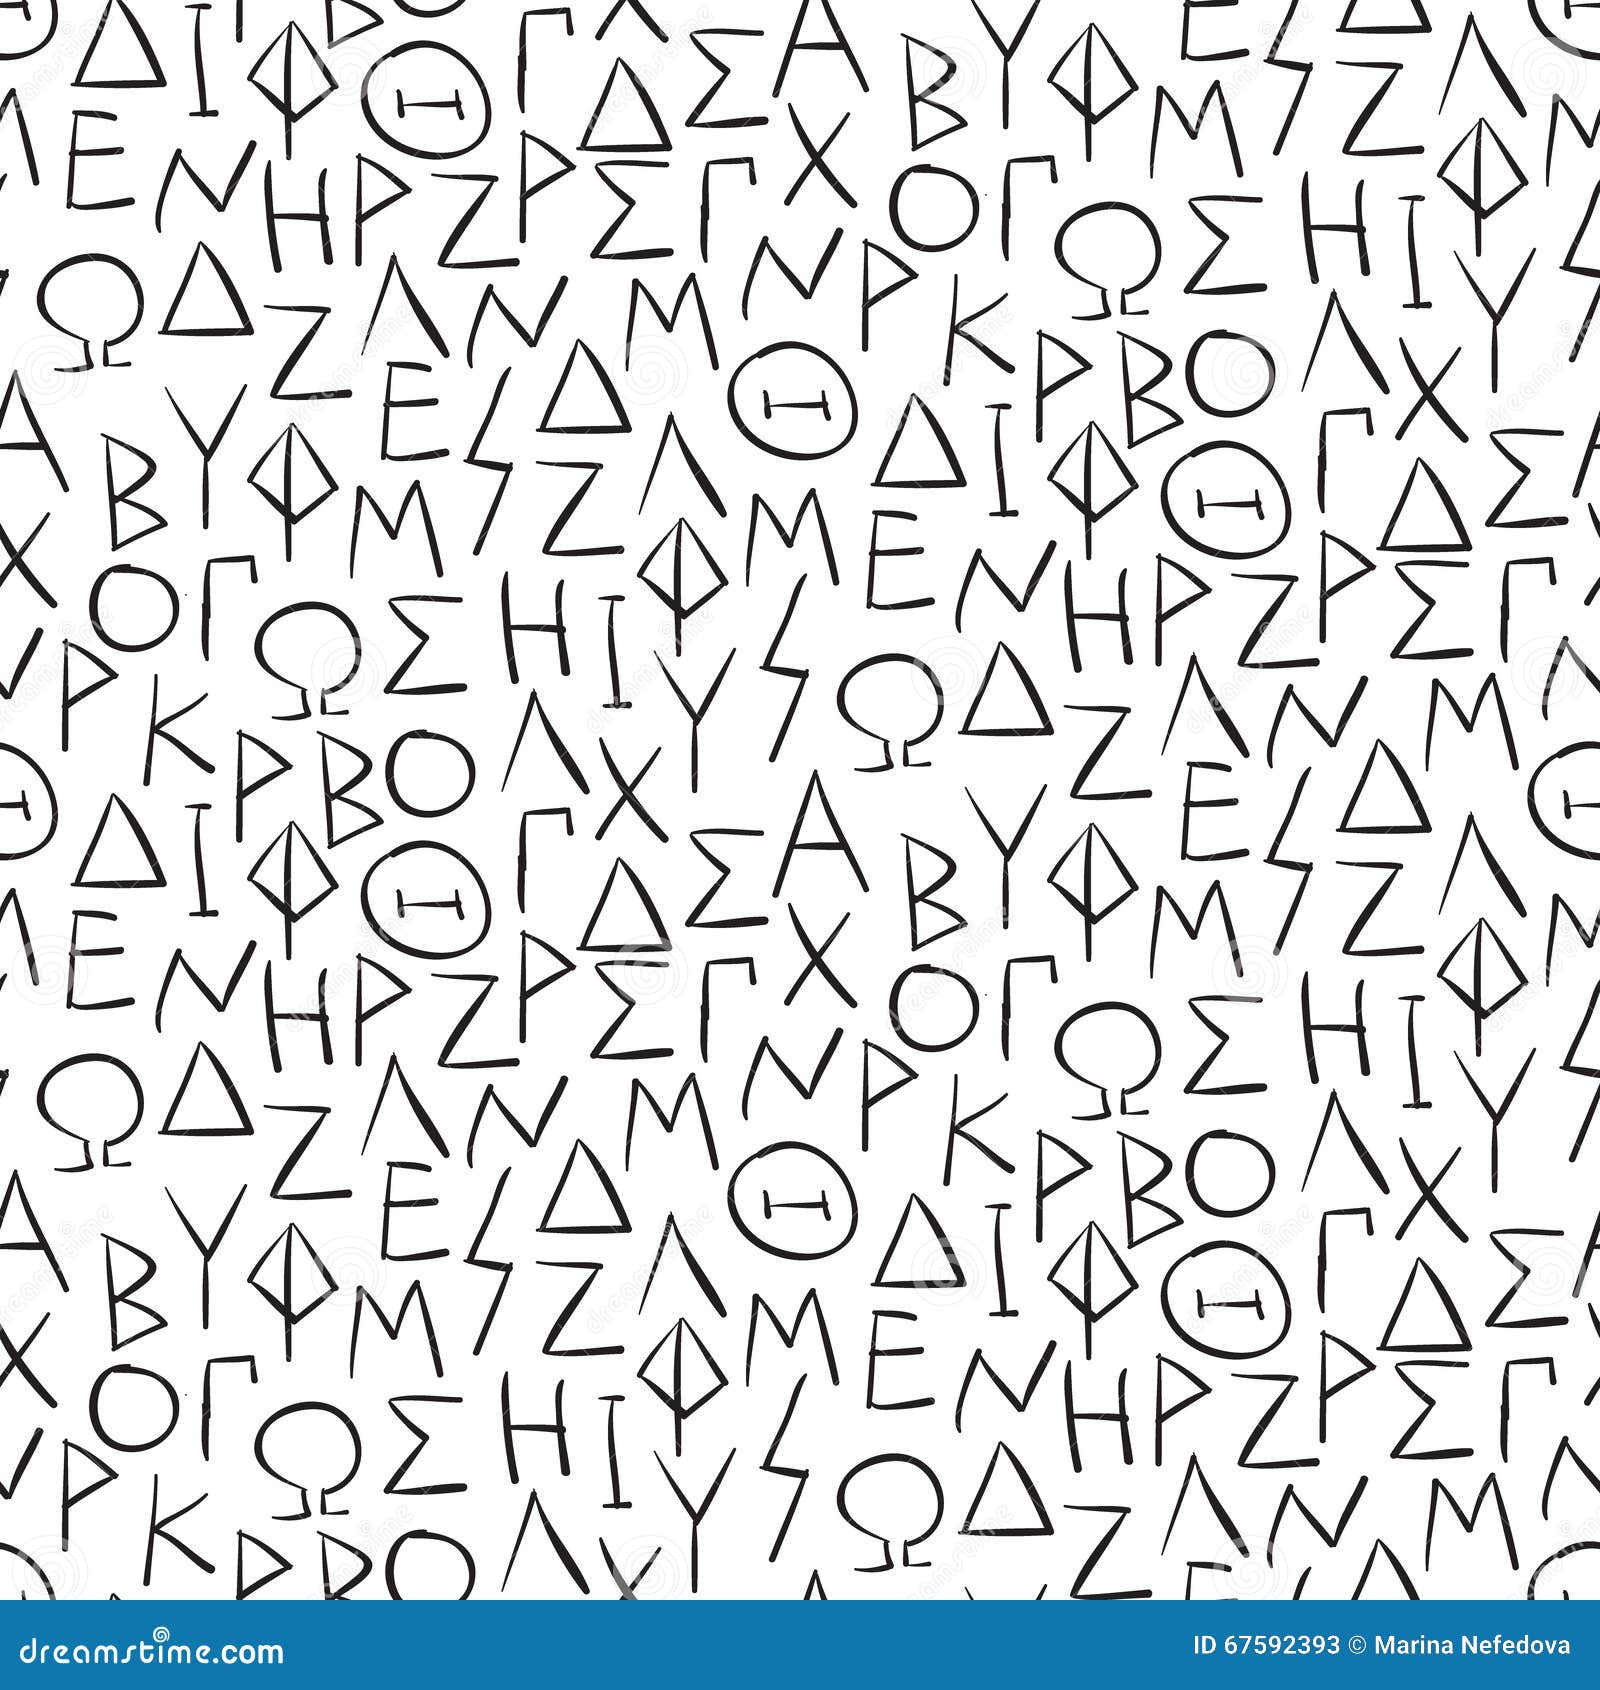 greek alphabet clip art free - photo #38